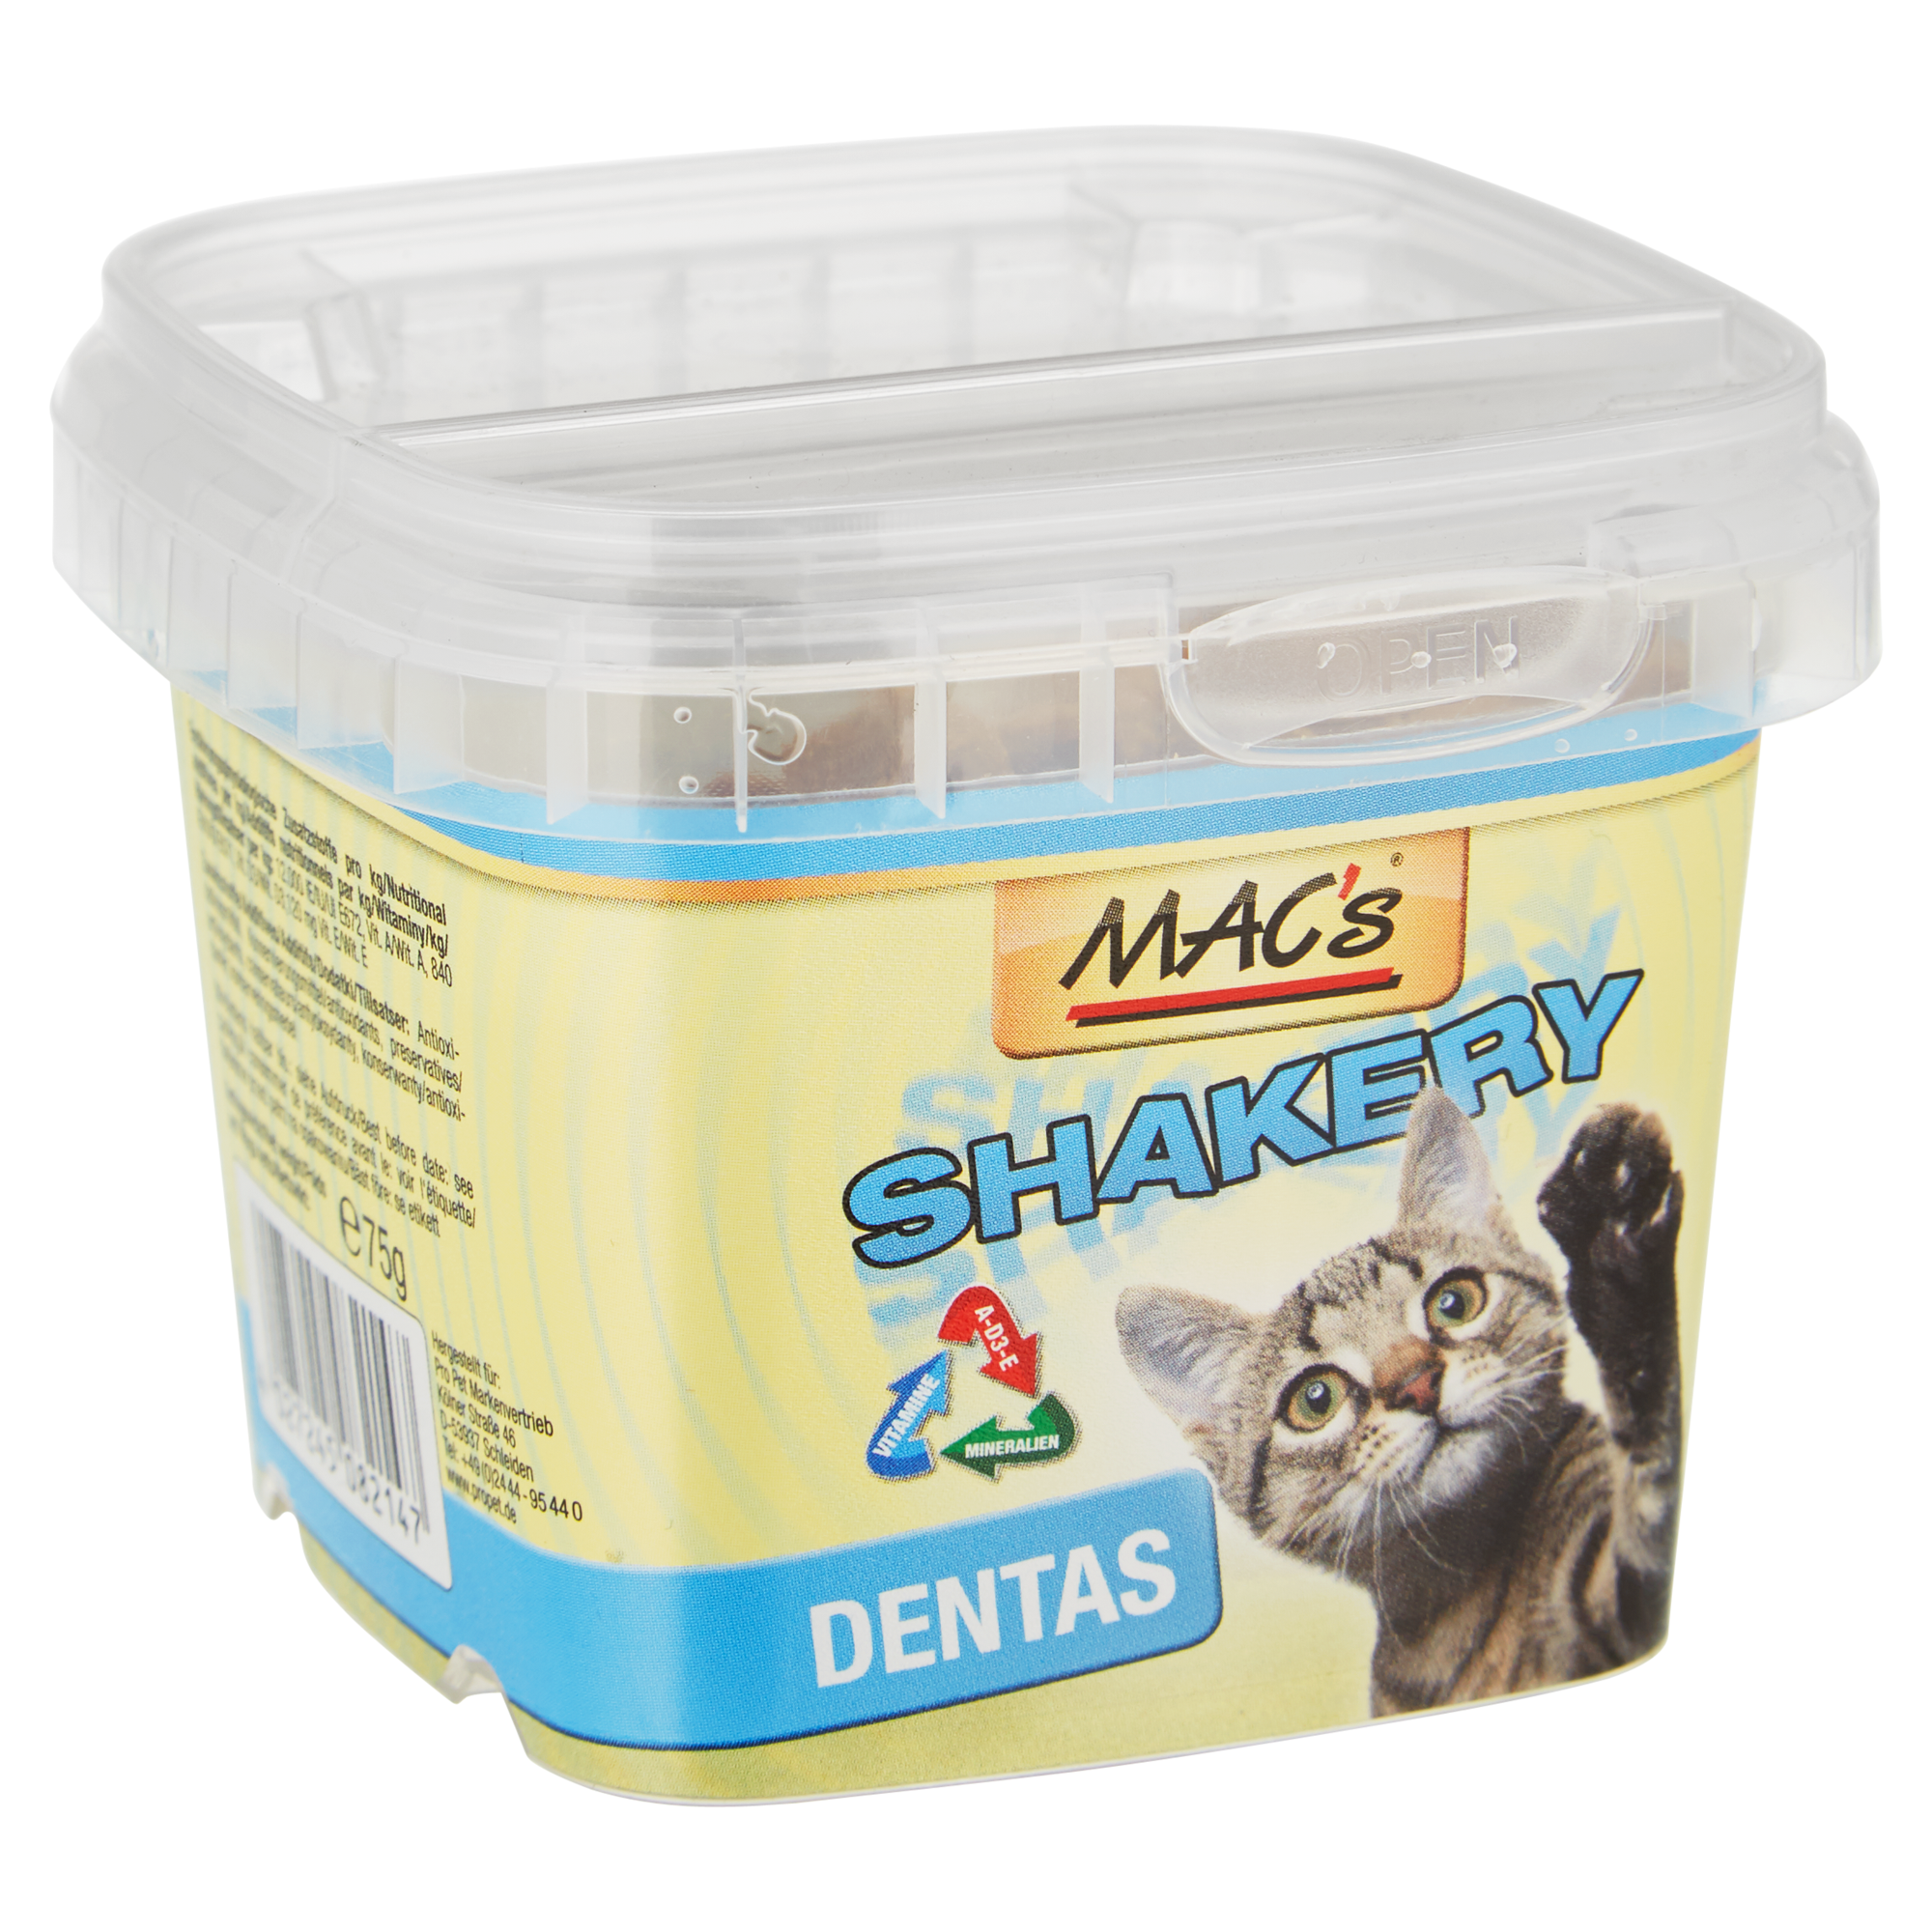 Katzensnack "Shakery" 75 g Dentas + product picture